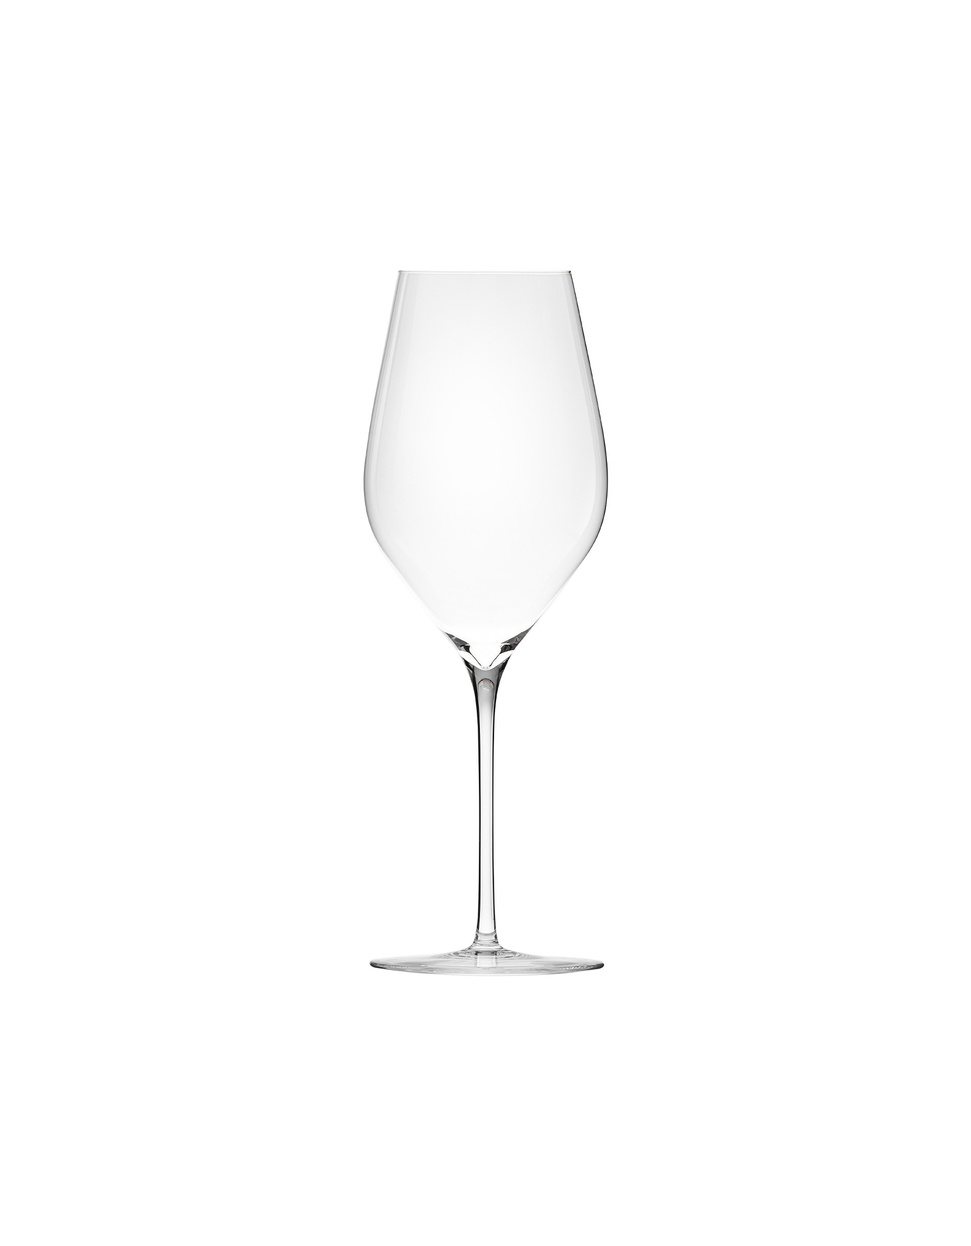 Oeno wine glass, 500 ml